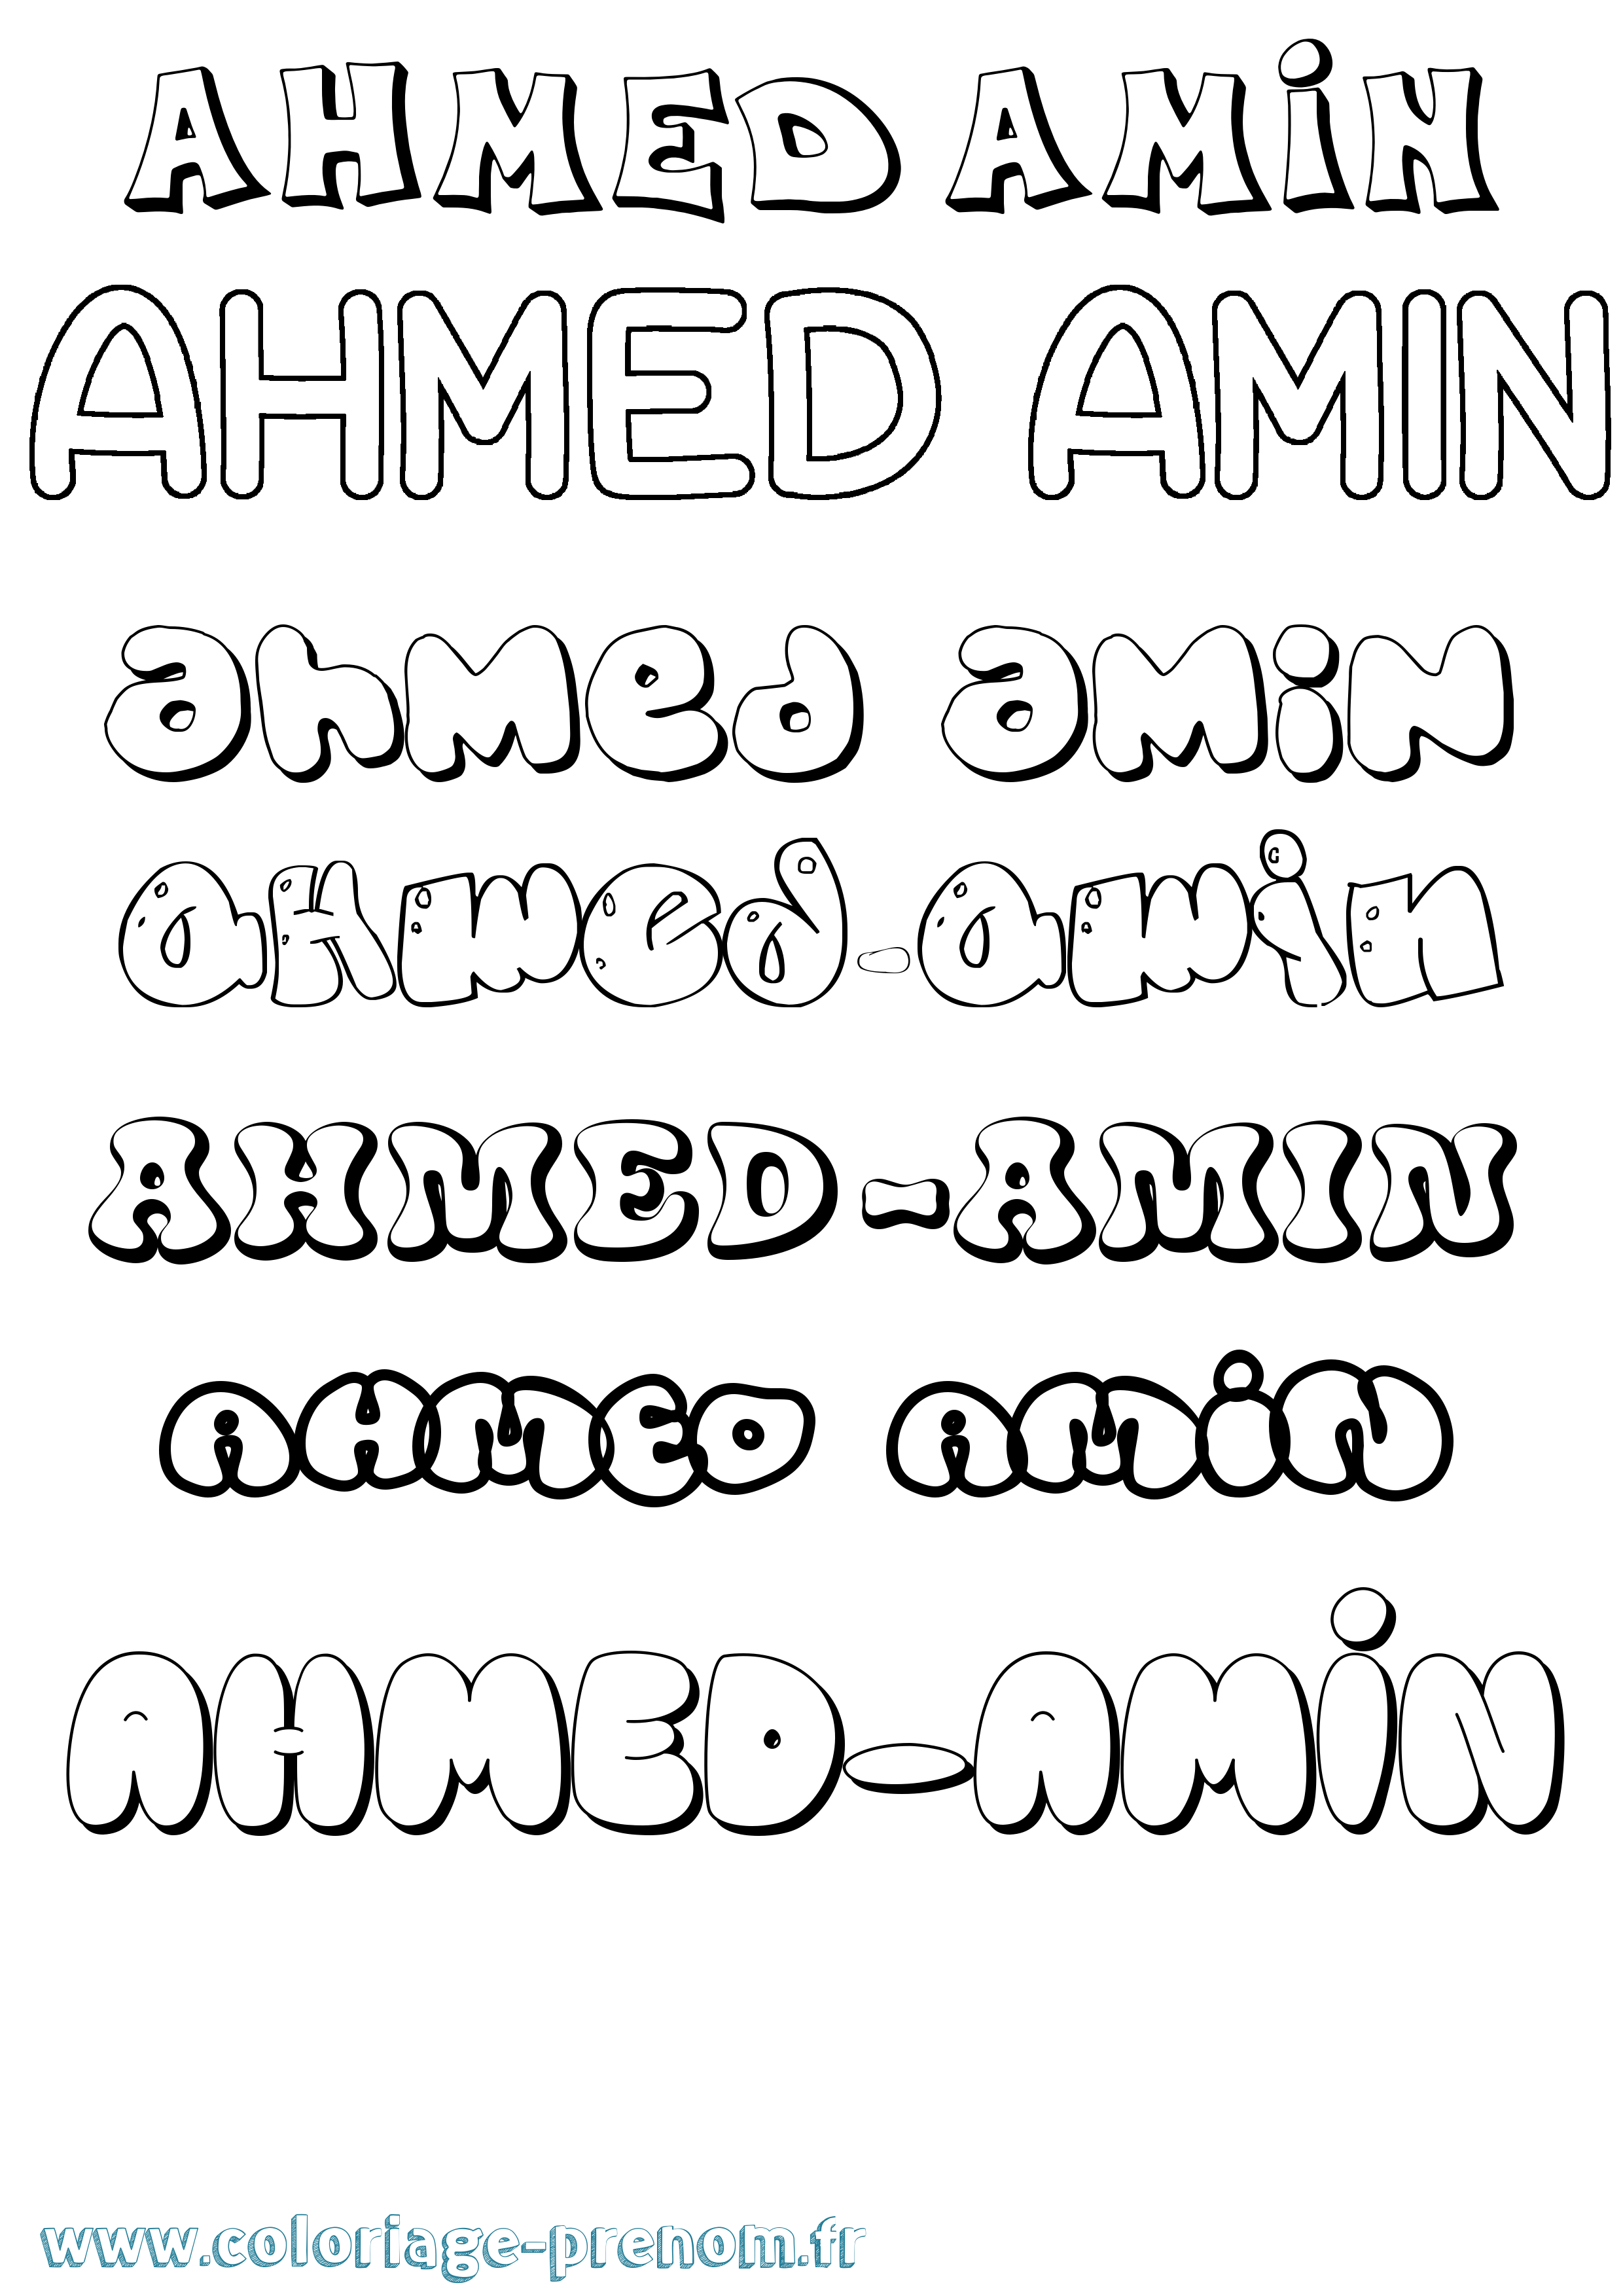 Coloriage prénom Ahmed-Amin Bubble